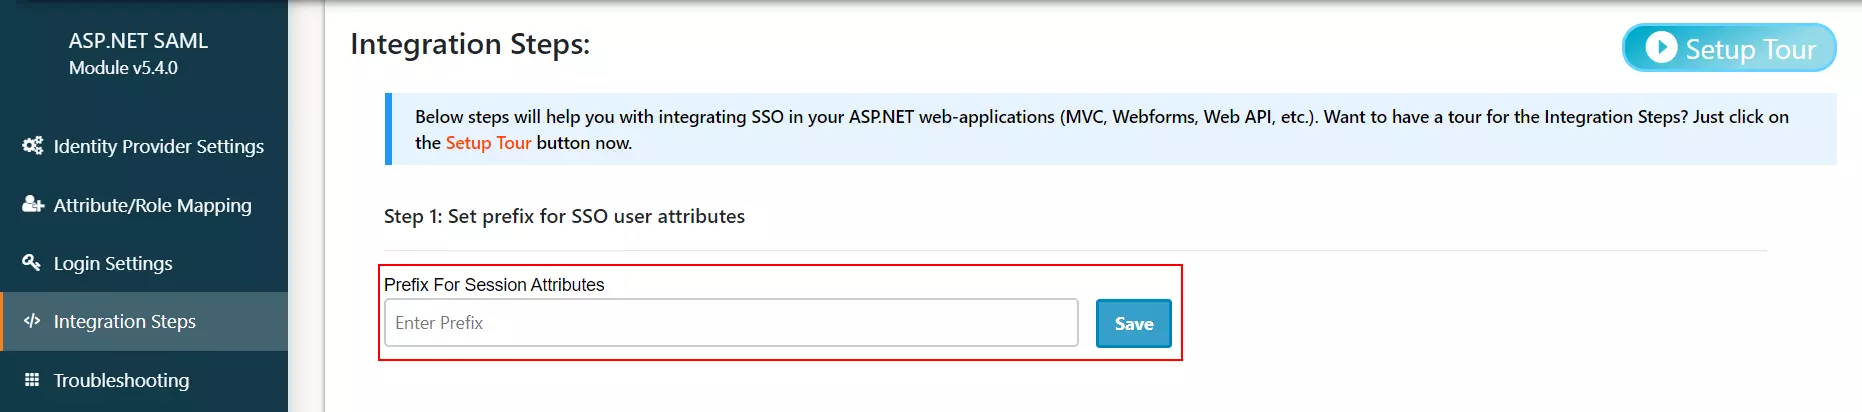 ASP.NET SAML Single Sign-On (SSO) using VMWare as IDP - Prefix SSO Attributes